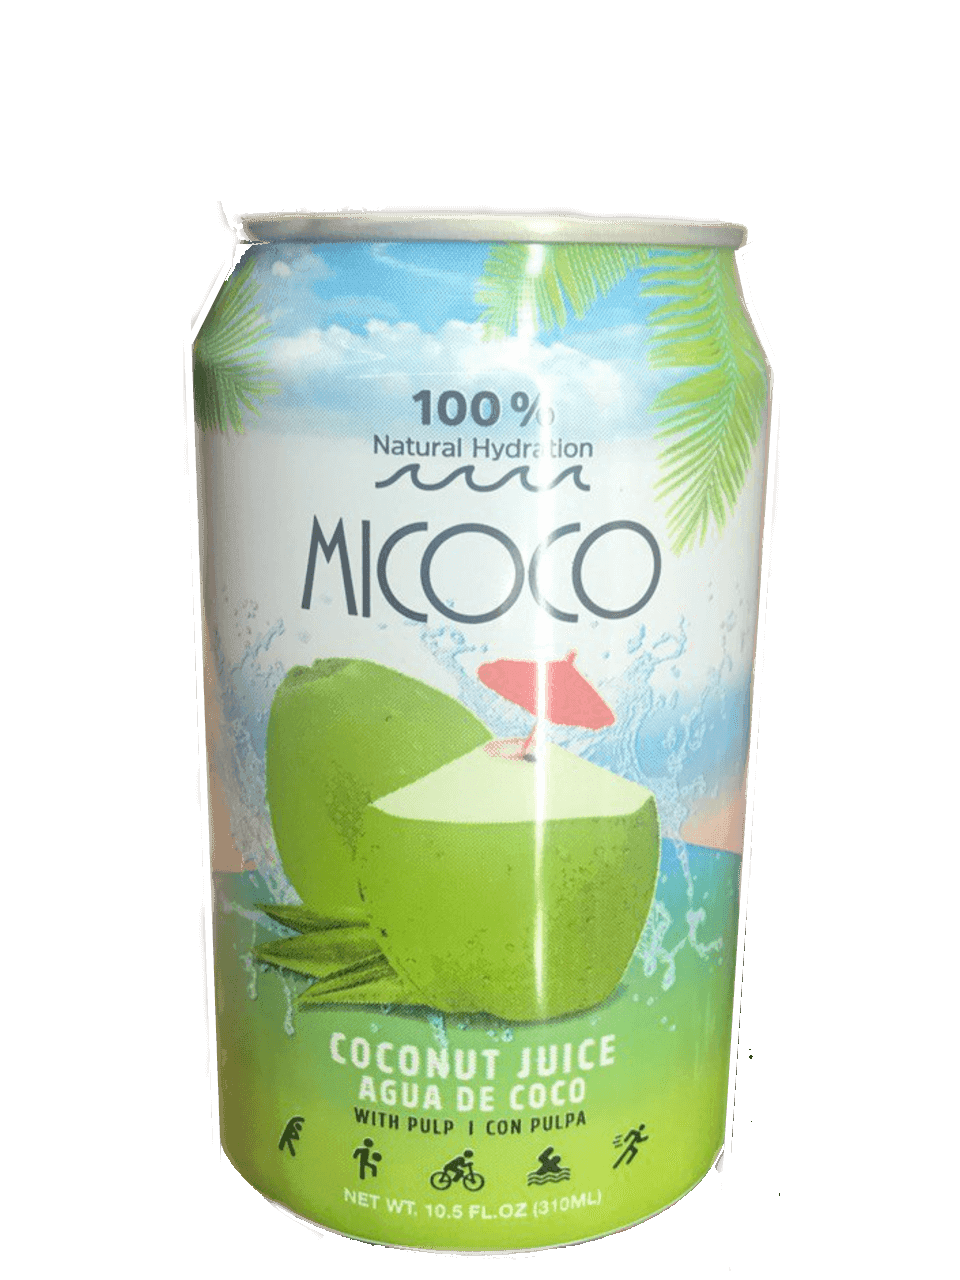 Micoco - Coconut Juice 10.5 Fl. oz.